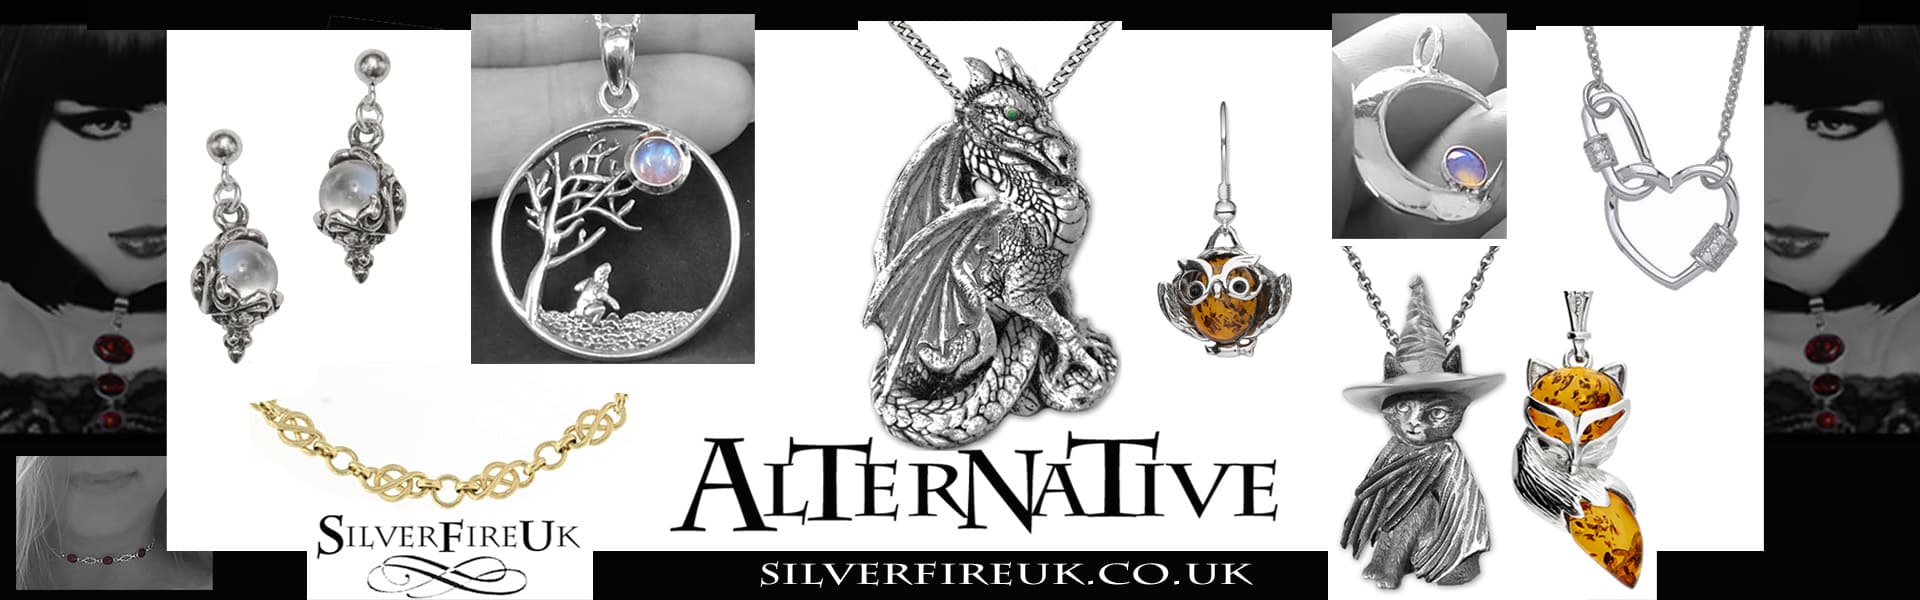 Unusual Alternative Jewellery - Silverfire UK Unique Jewellery Designs 